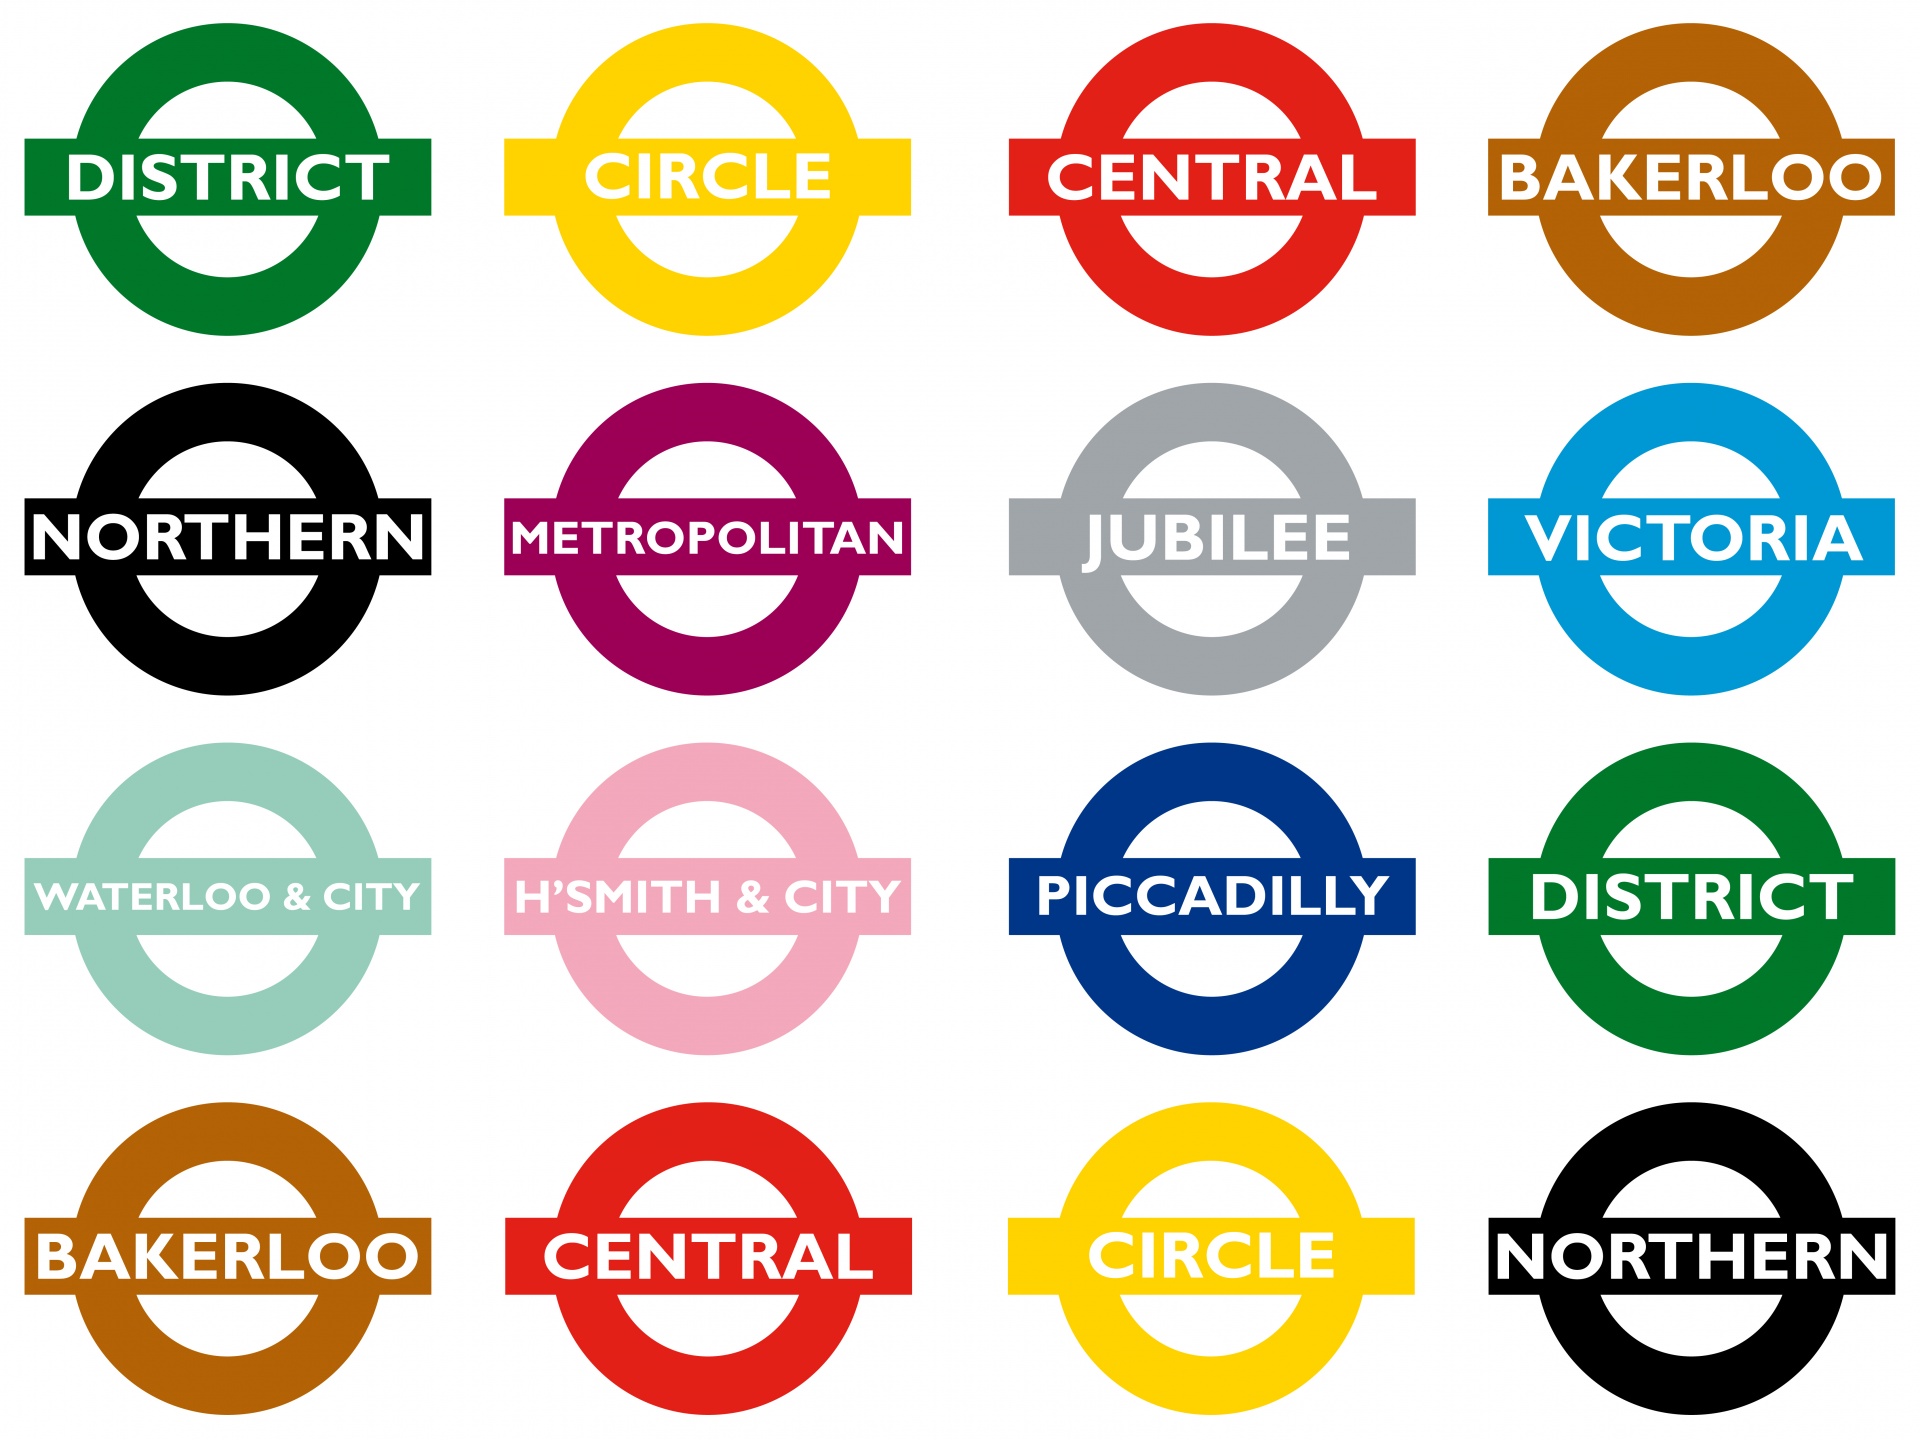 London Underground Tube Signs Wallpaper Photo From Needpix